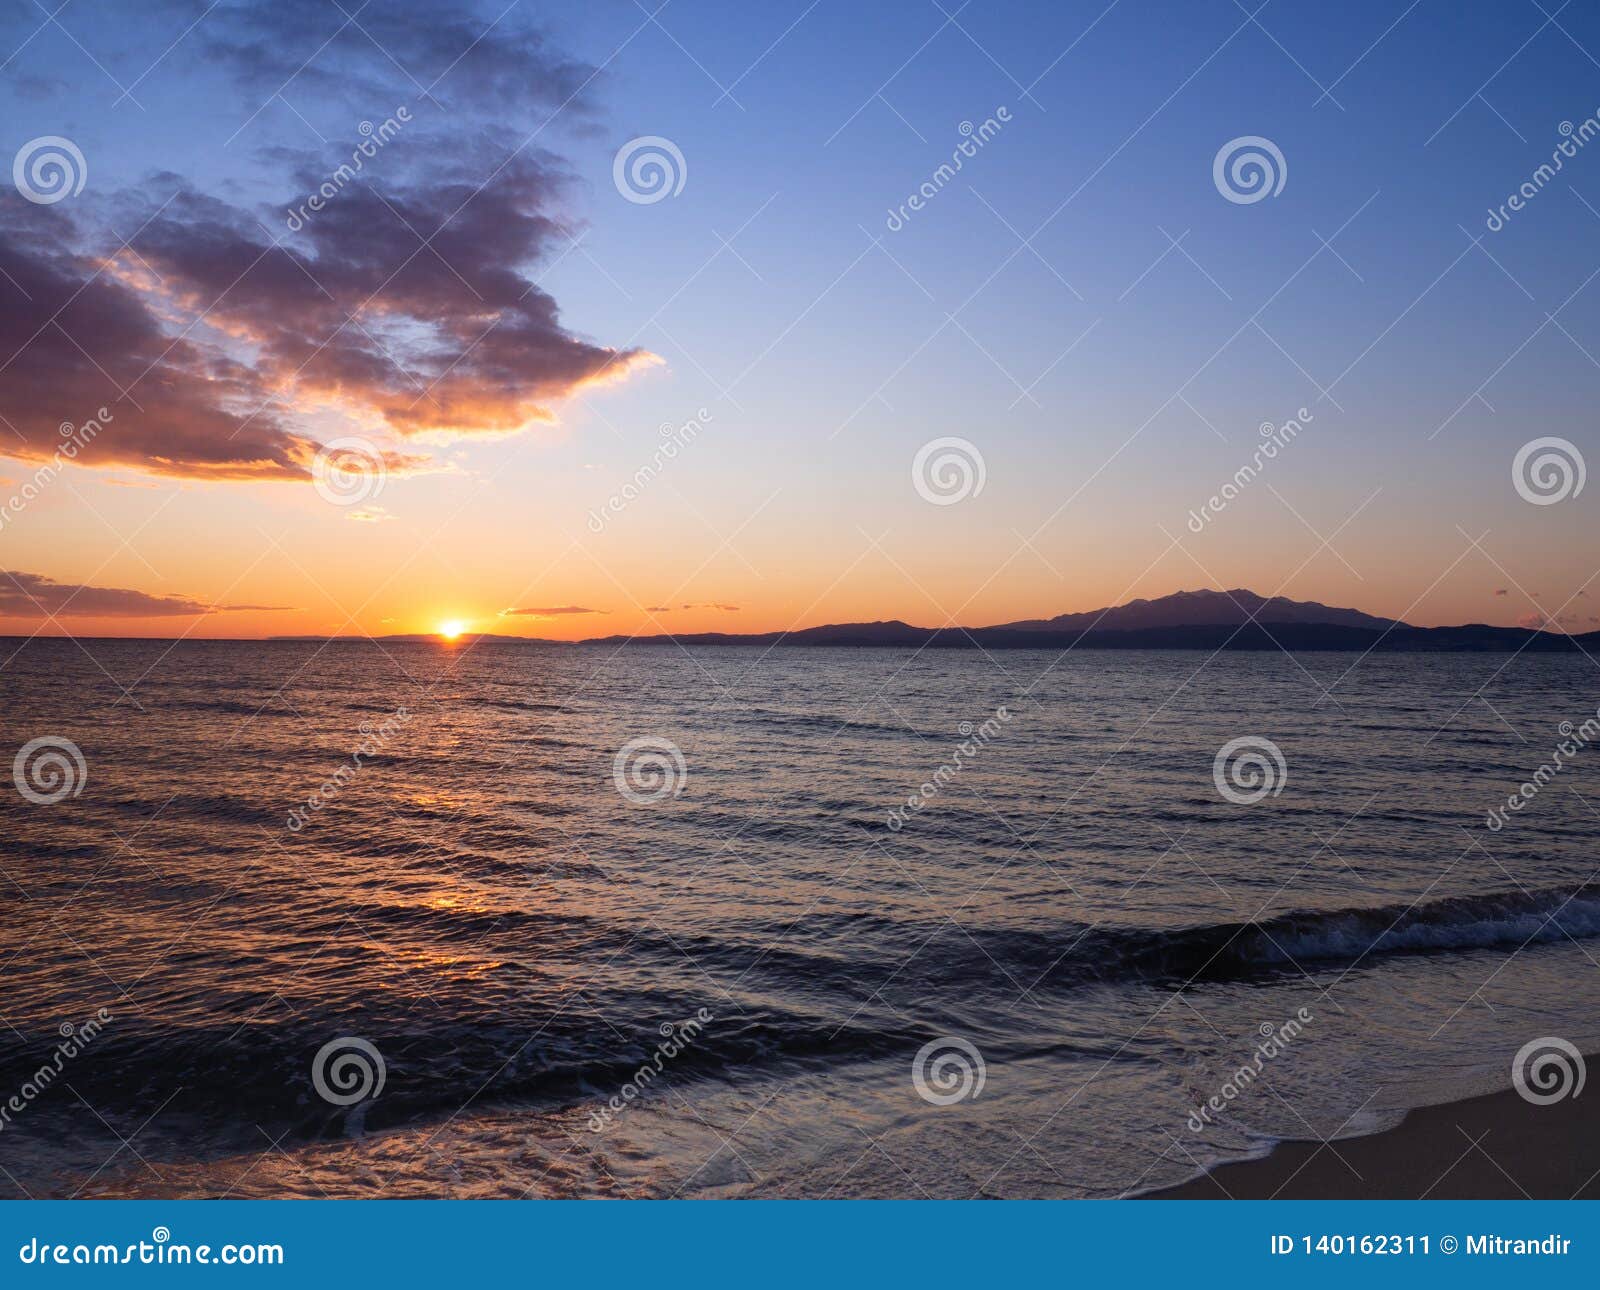 beautiful sunset on the beaches of kavala, greece